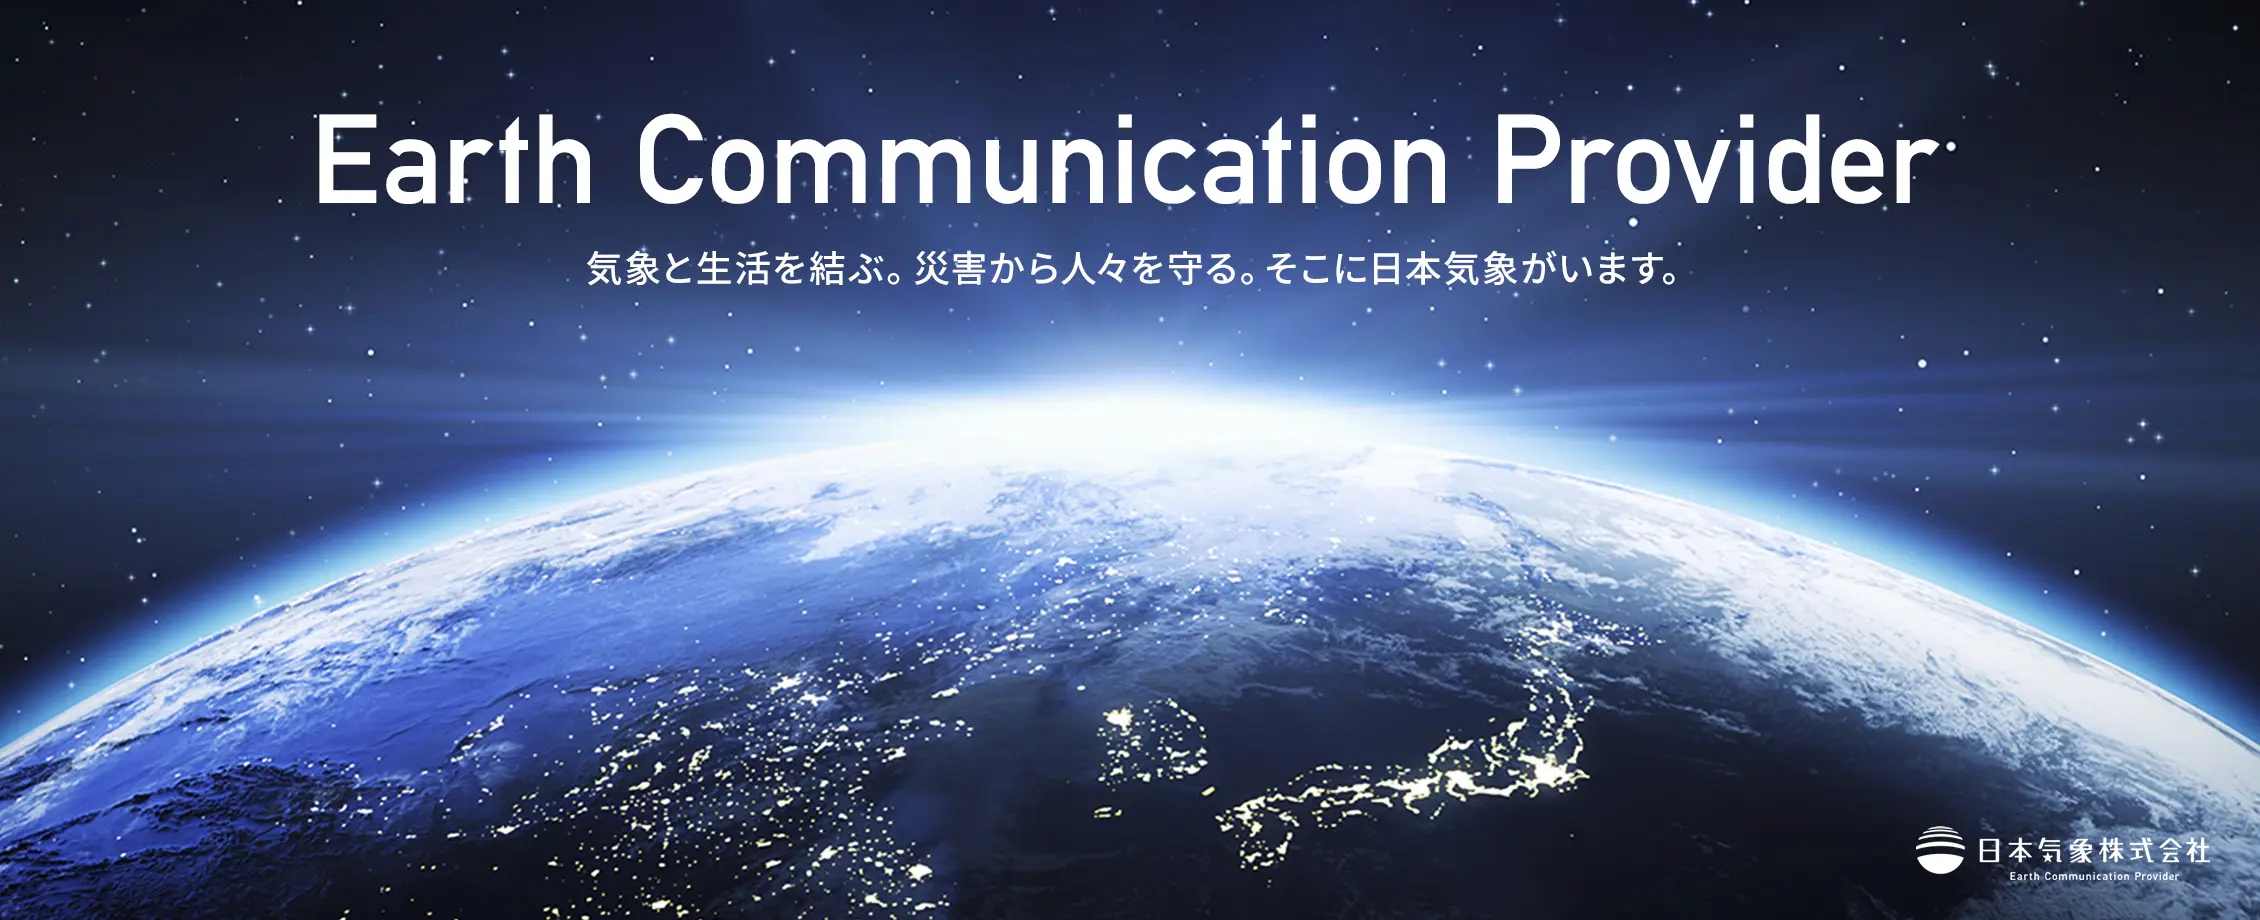 Earth Communication Provider 気象と生活を結ぶ。災害から人々を守る。そこに日本気象がいます。